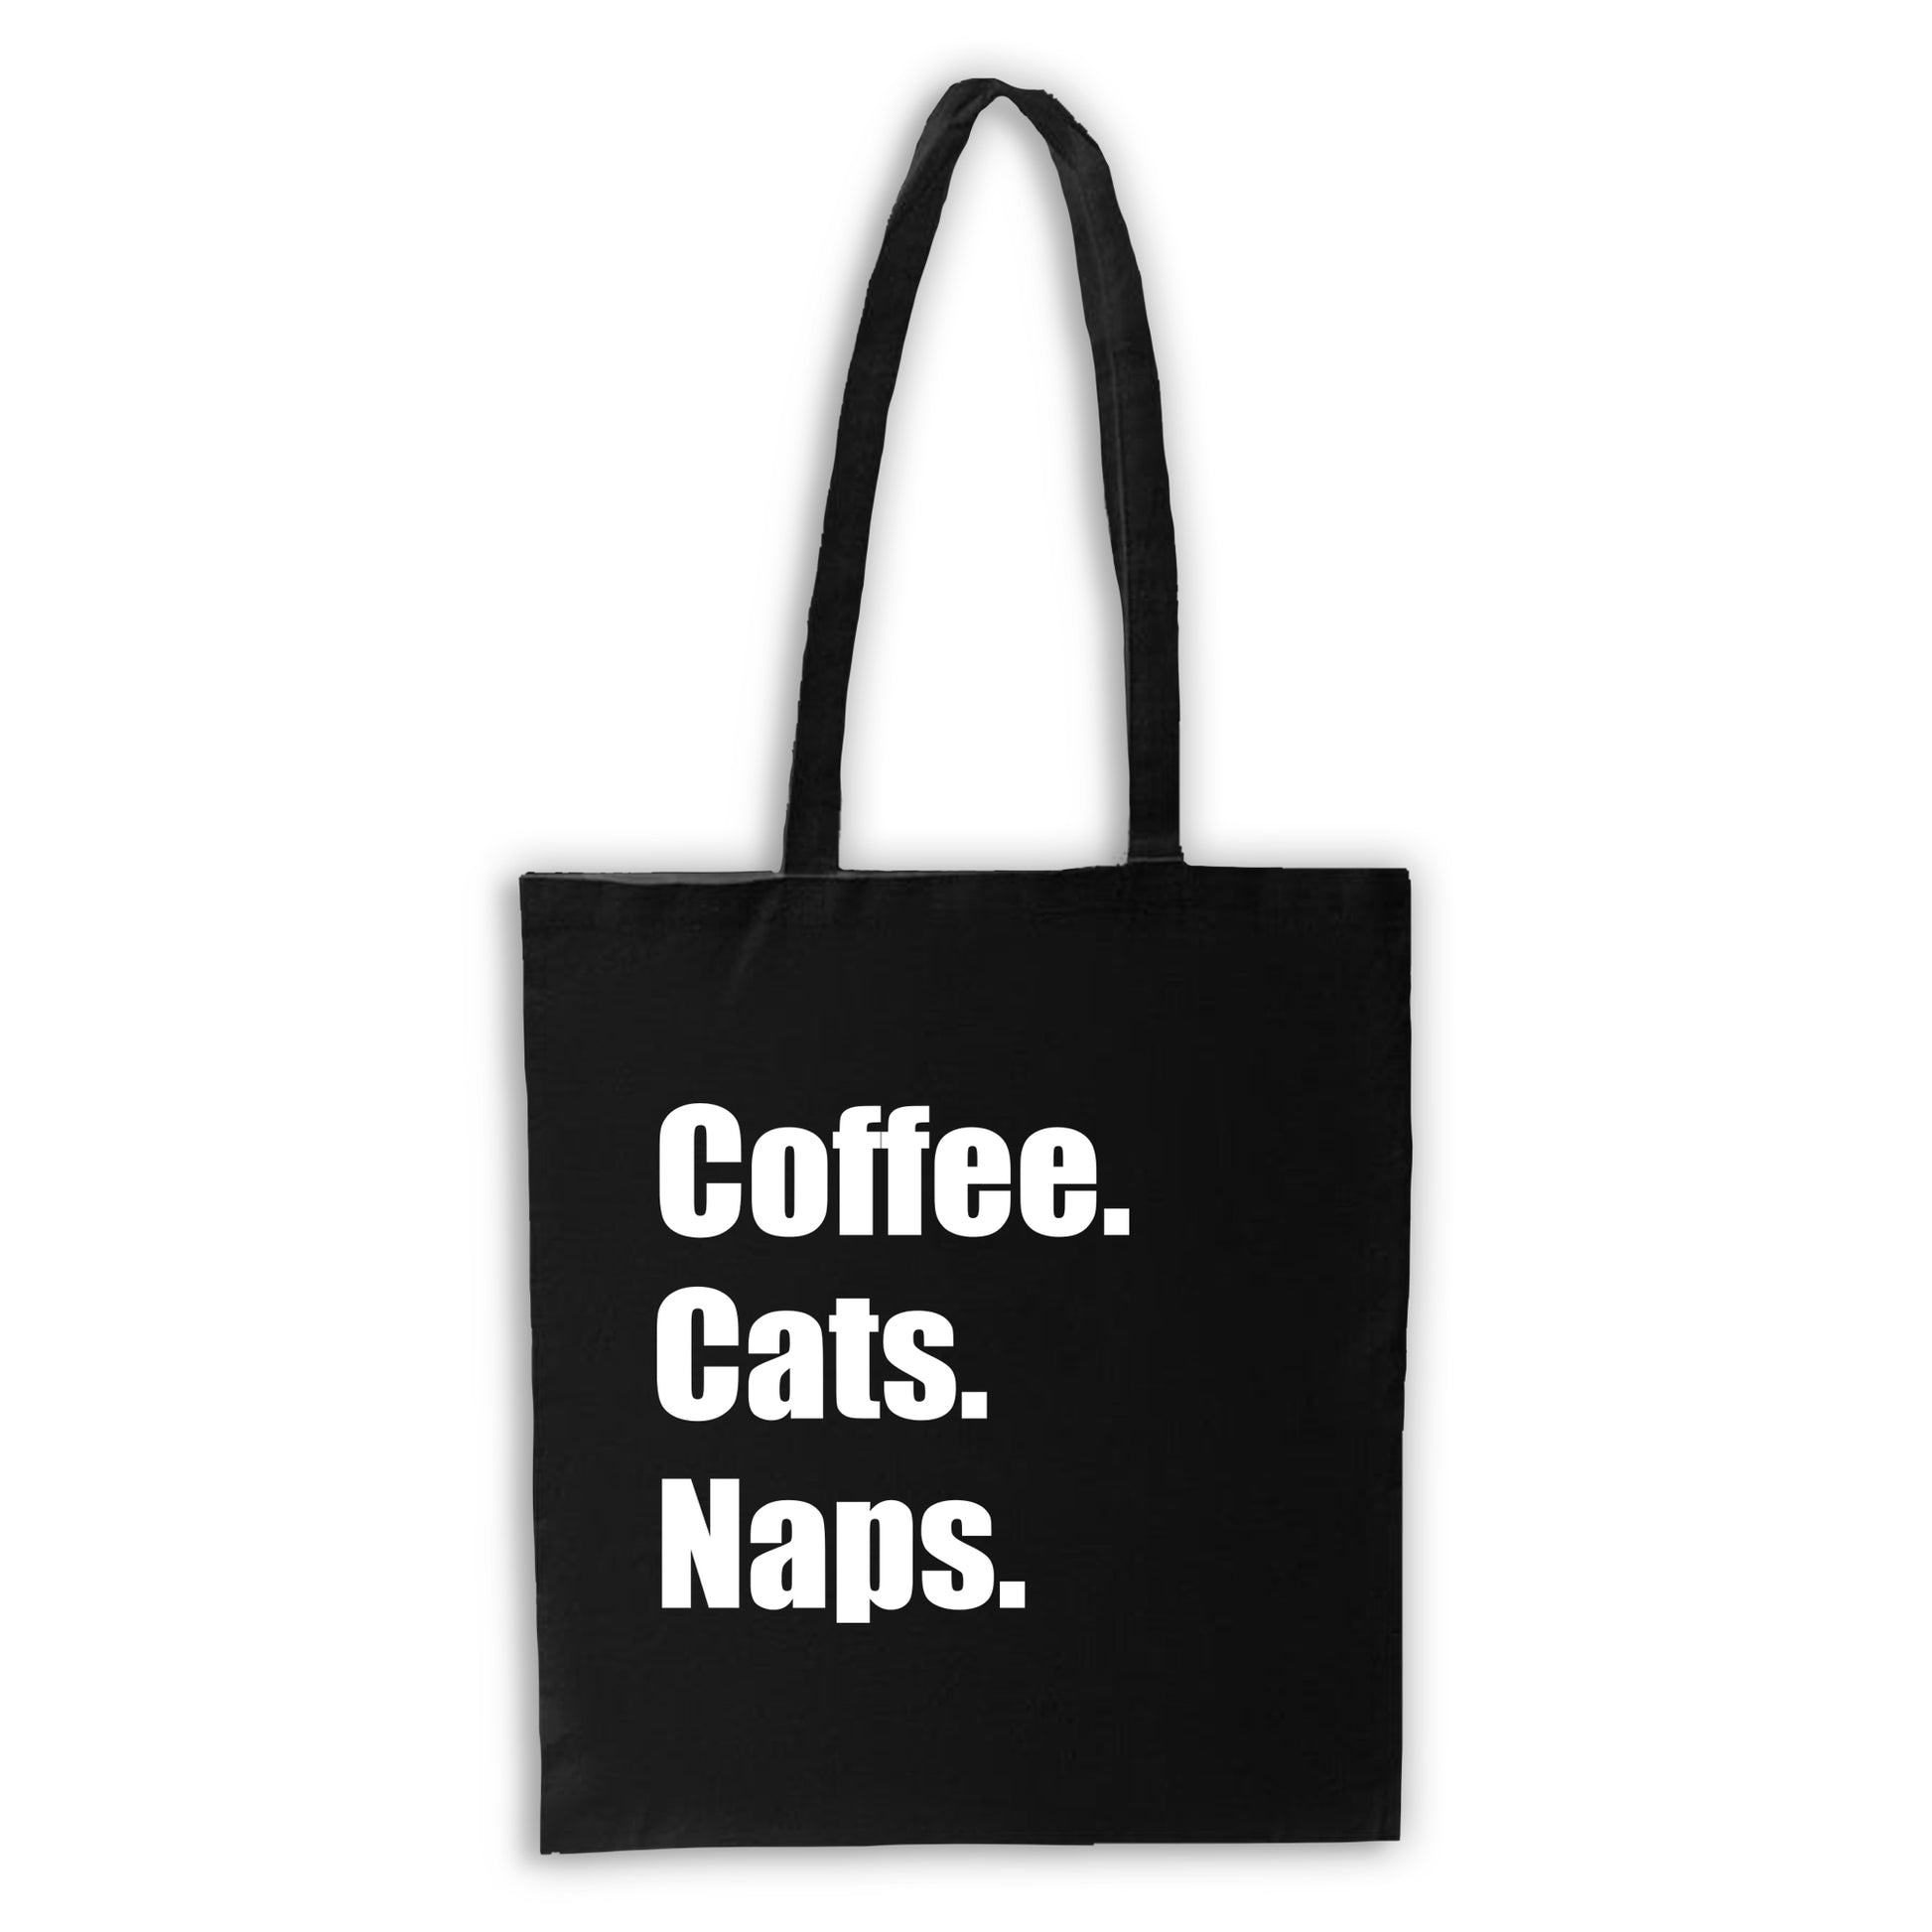 Coffee. Cats. Naps. - Black Tote Bag